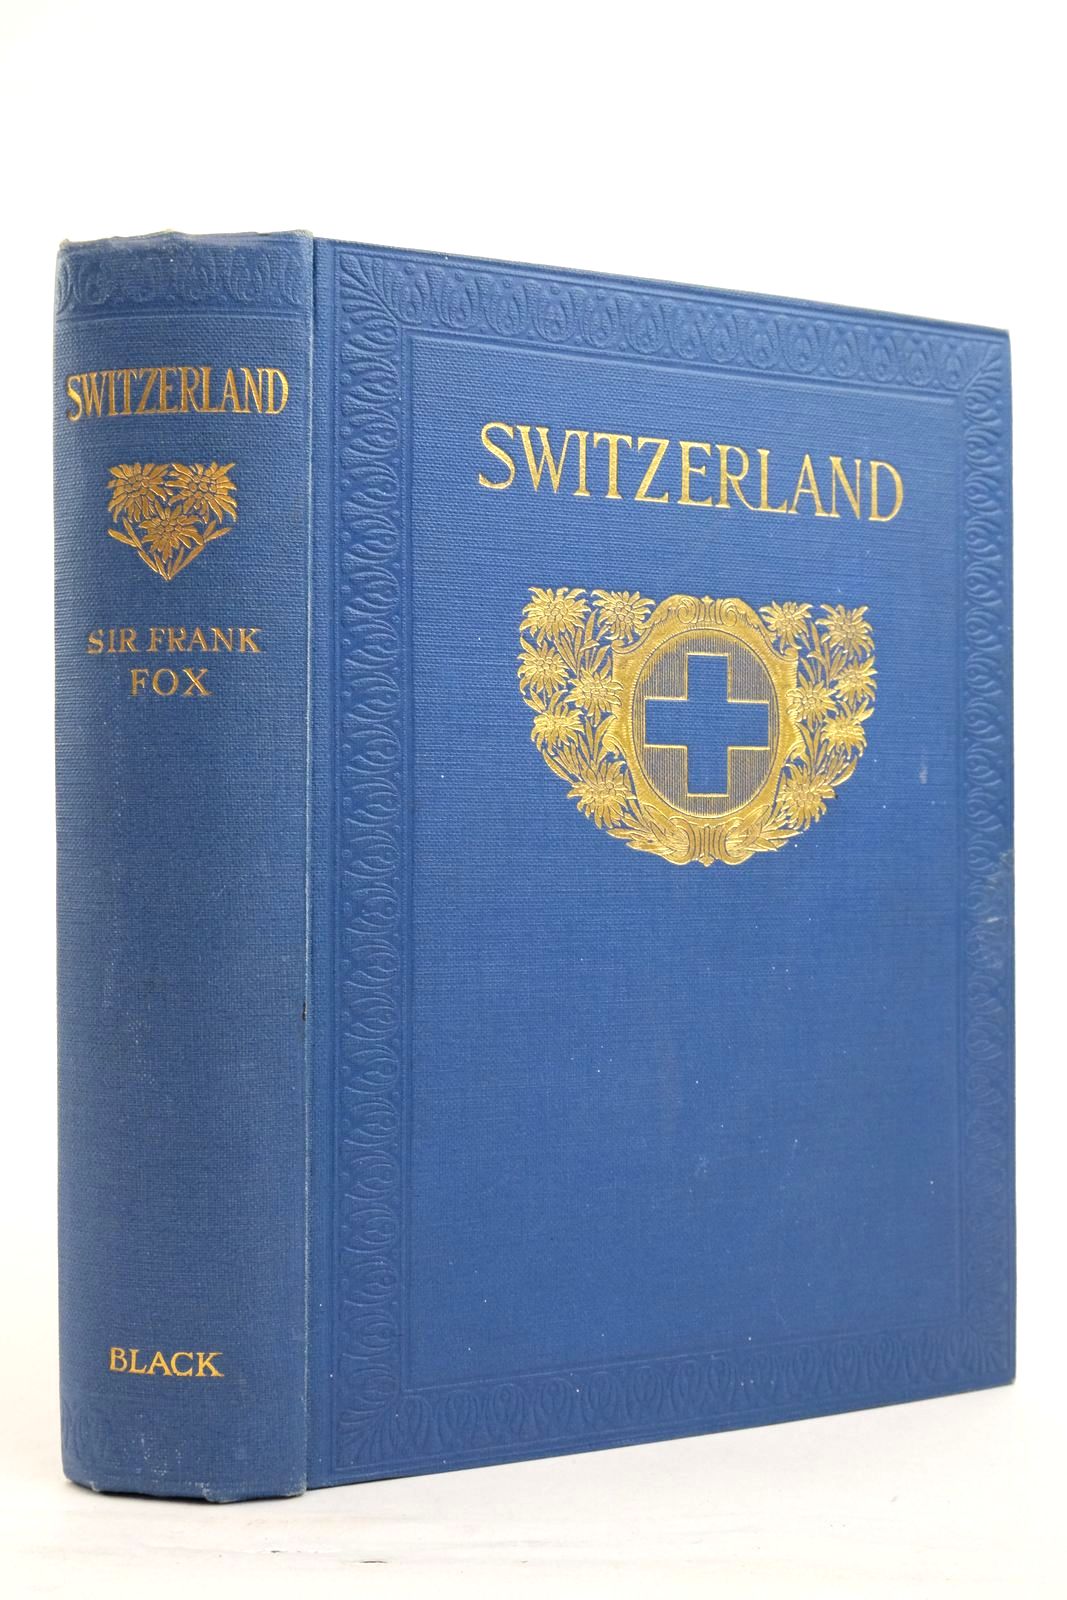 Photo of SWITZERLAND- Stock Number: 2137220